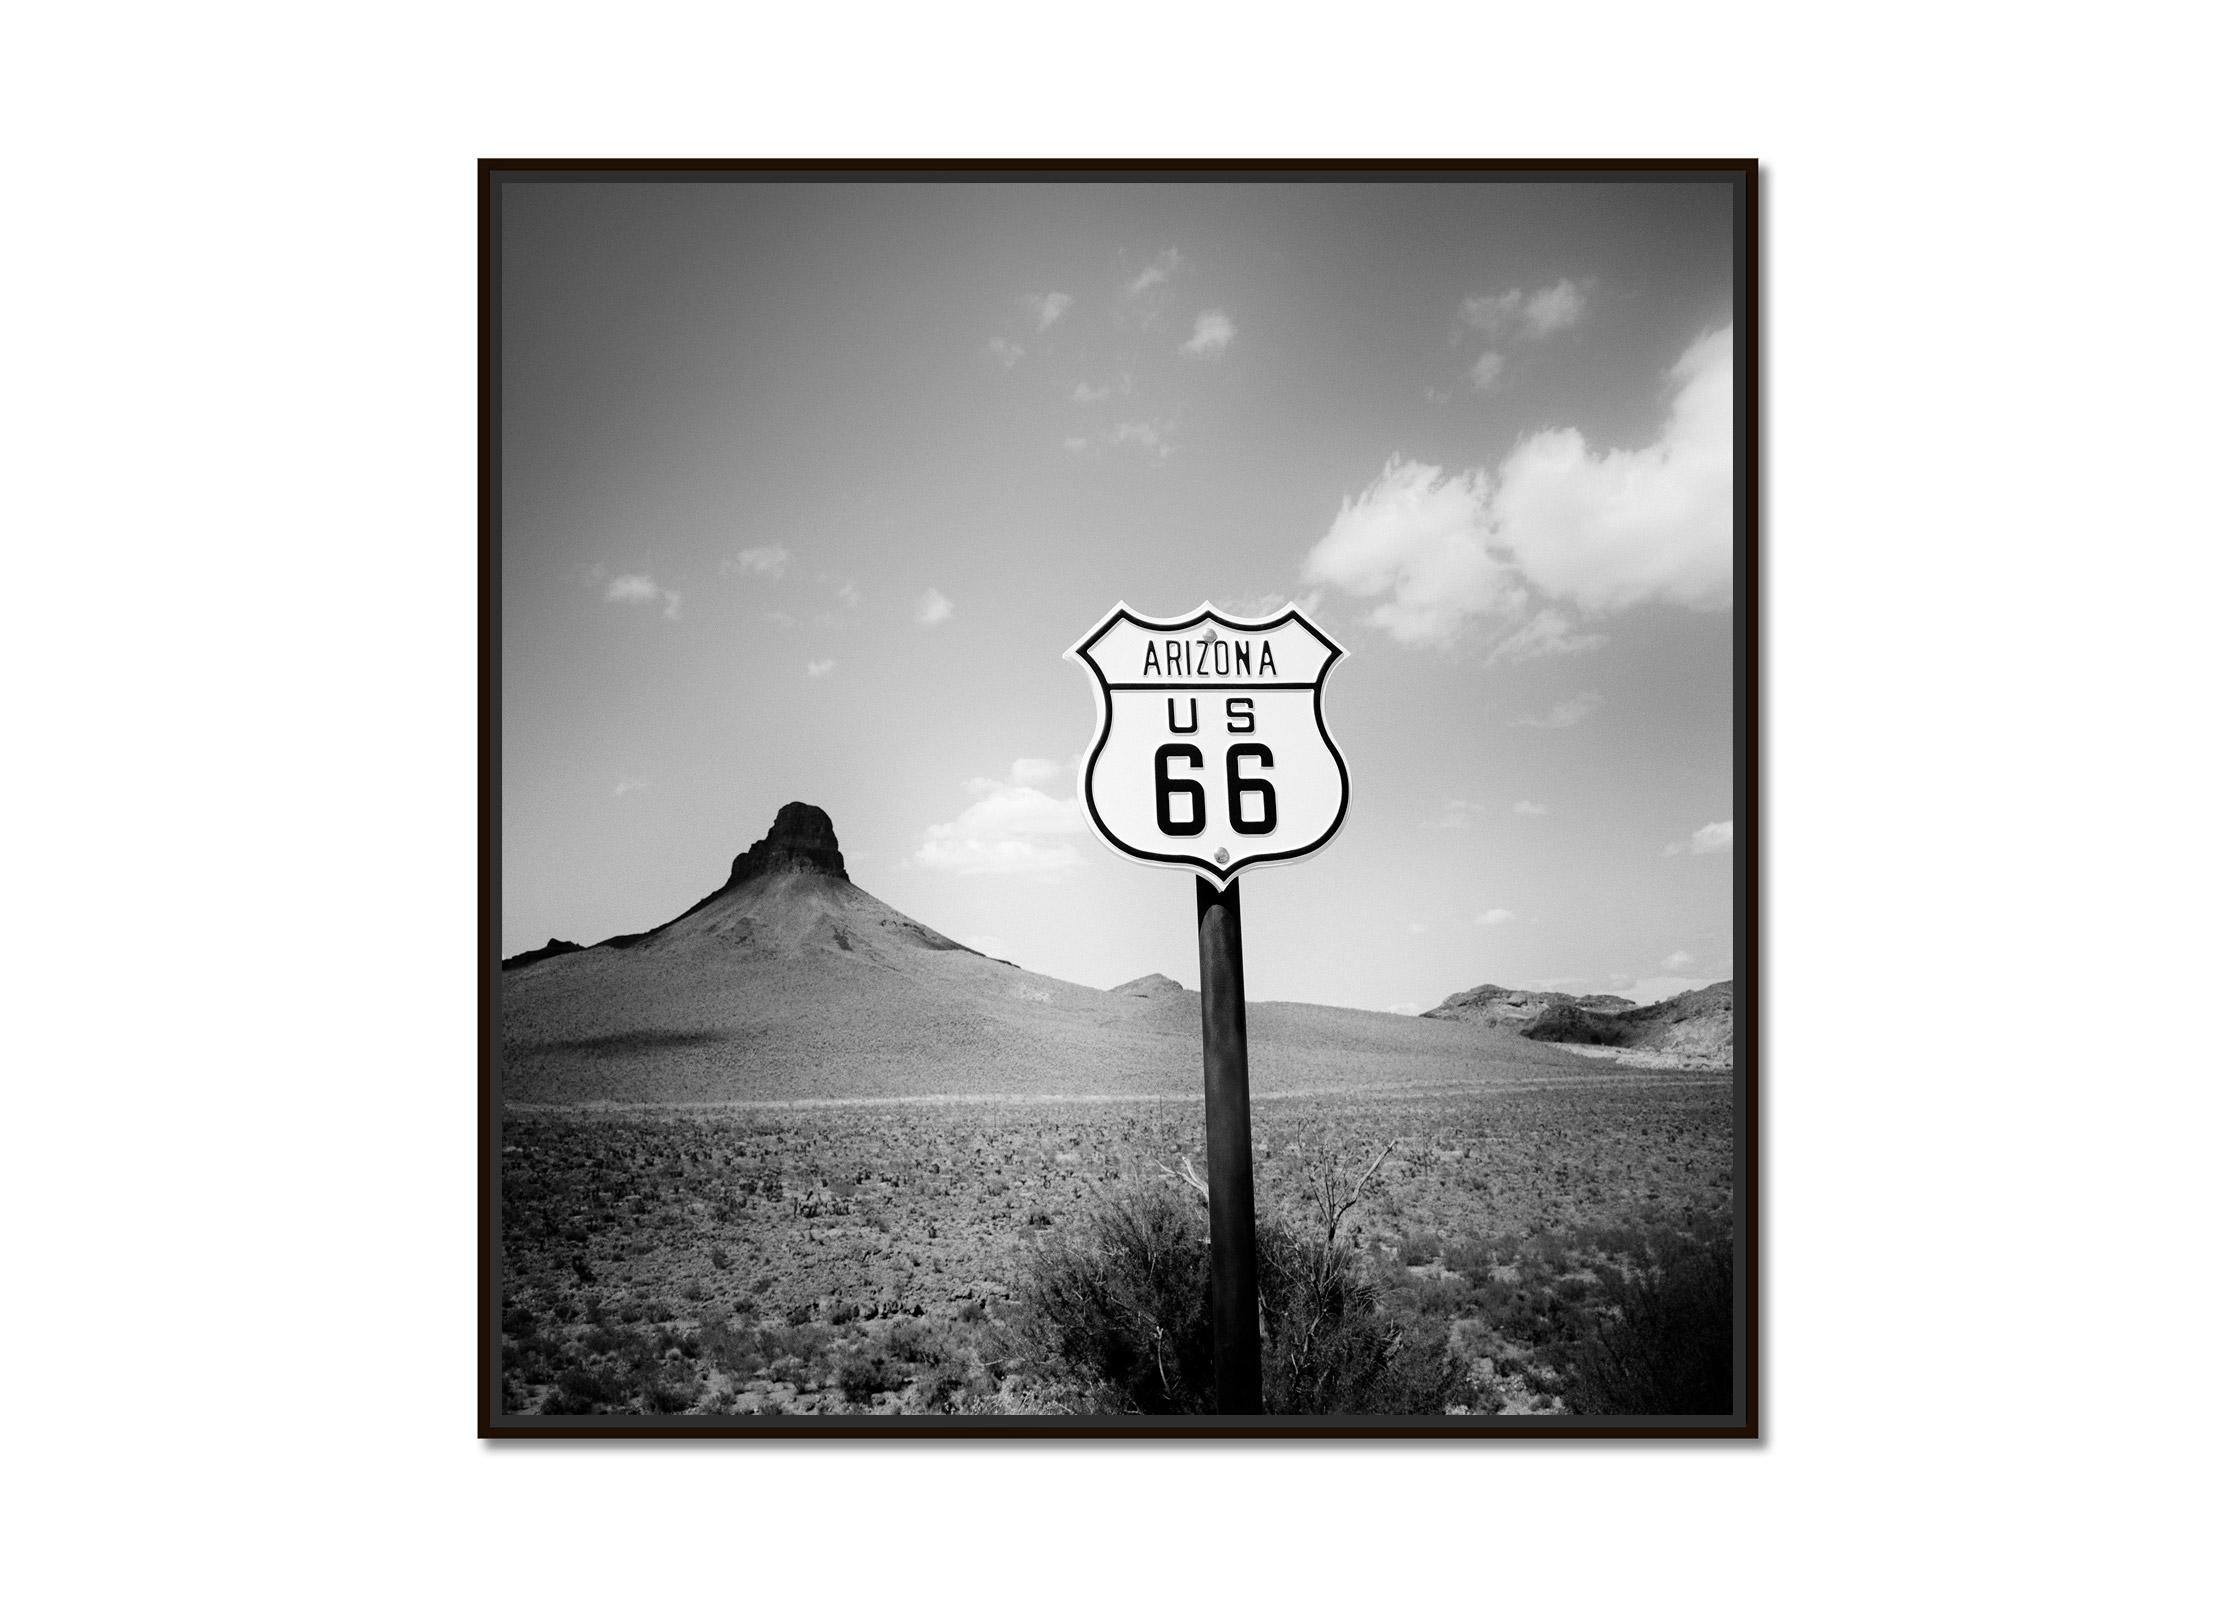 ARIZONA US 66, USA, black and white photography landscape fine art print - Photograph by Gerald Berghammer